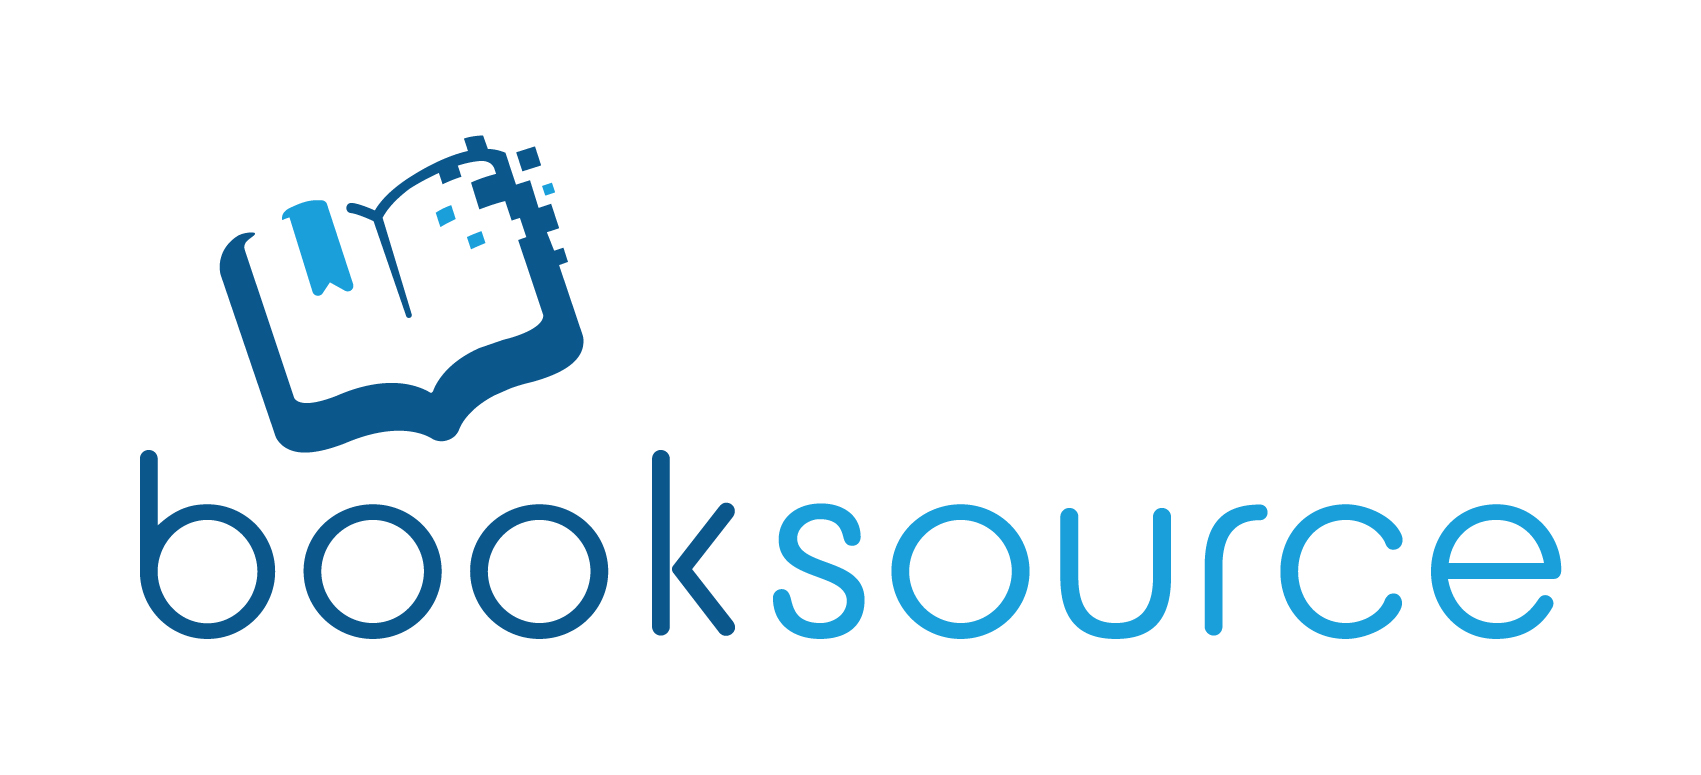 Booksource logo